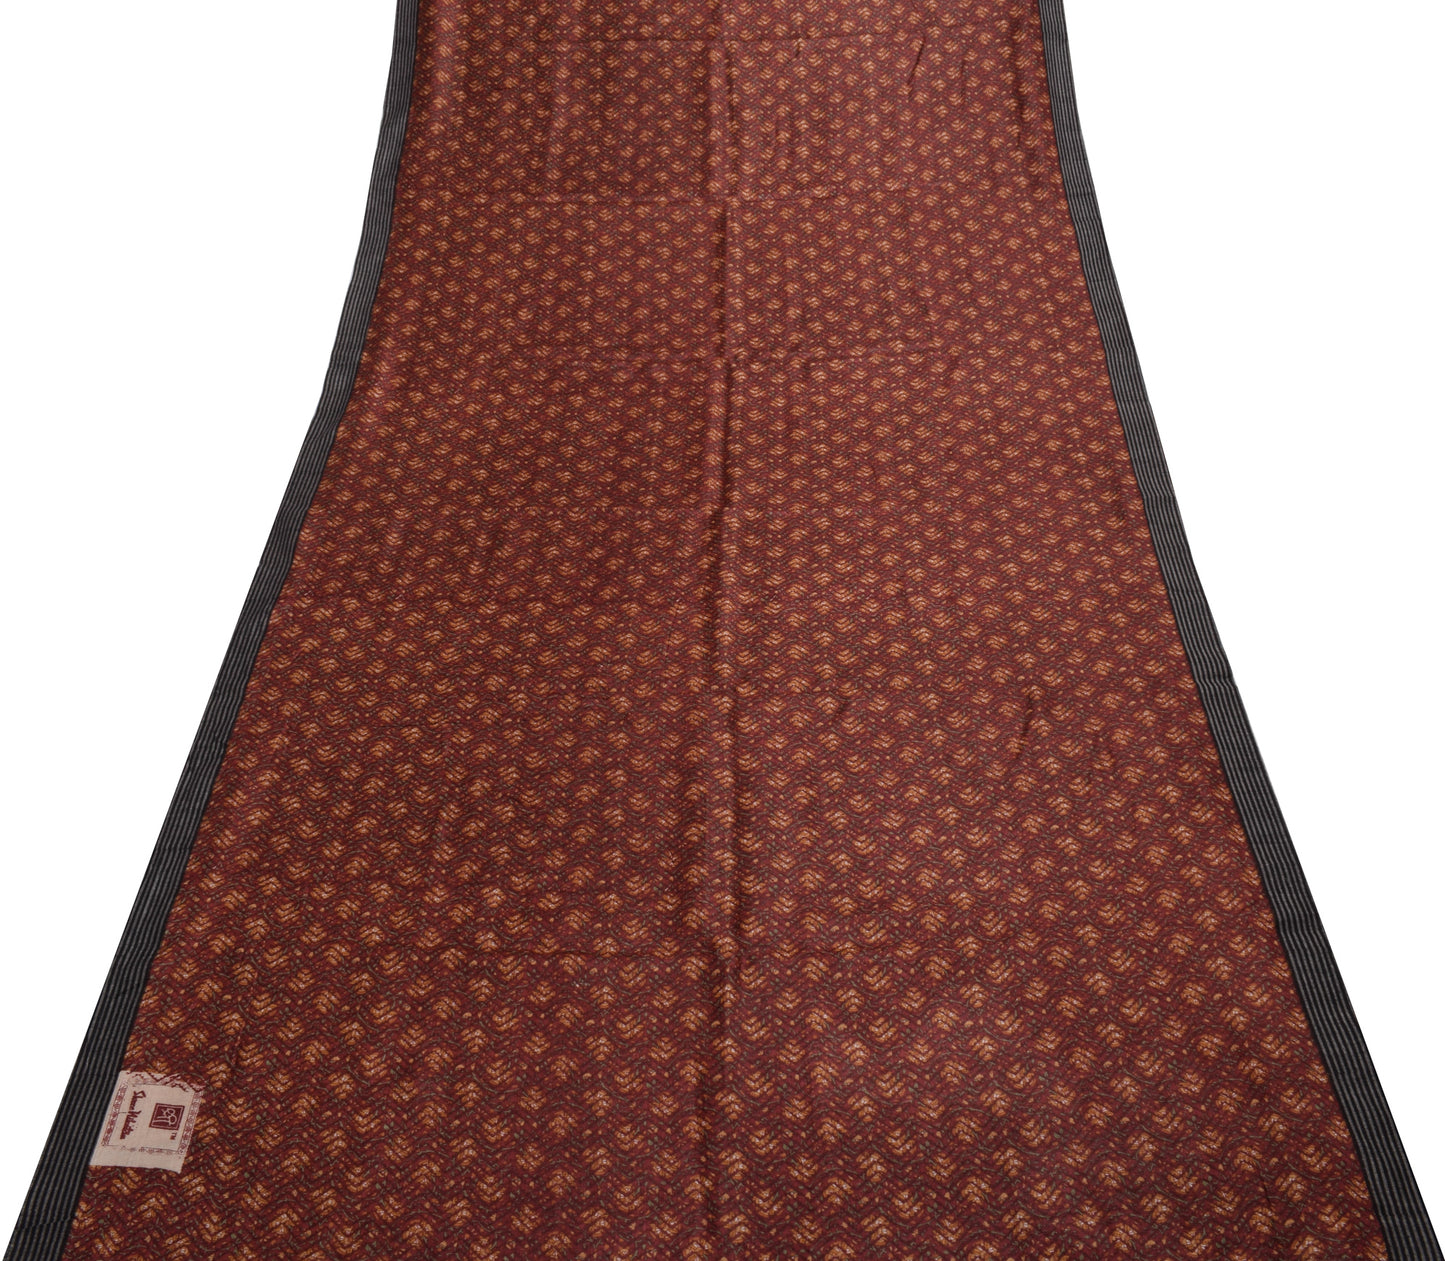 Sushila Vintage Maroon Branded Saree 100% Pure Woolen Woven Floral Sari Fabric